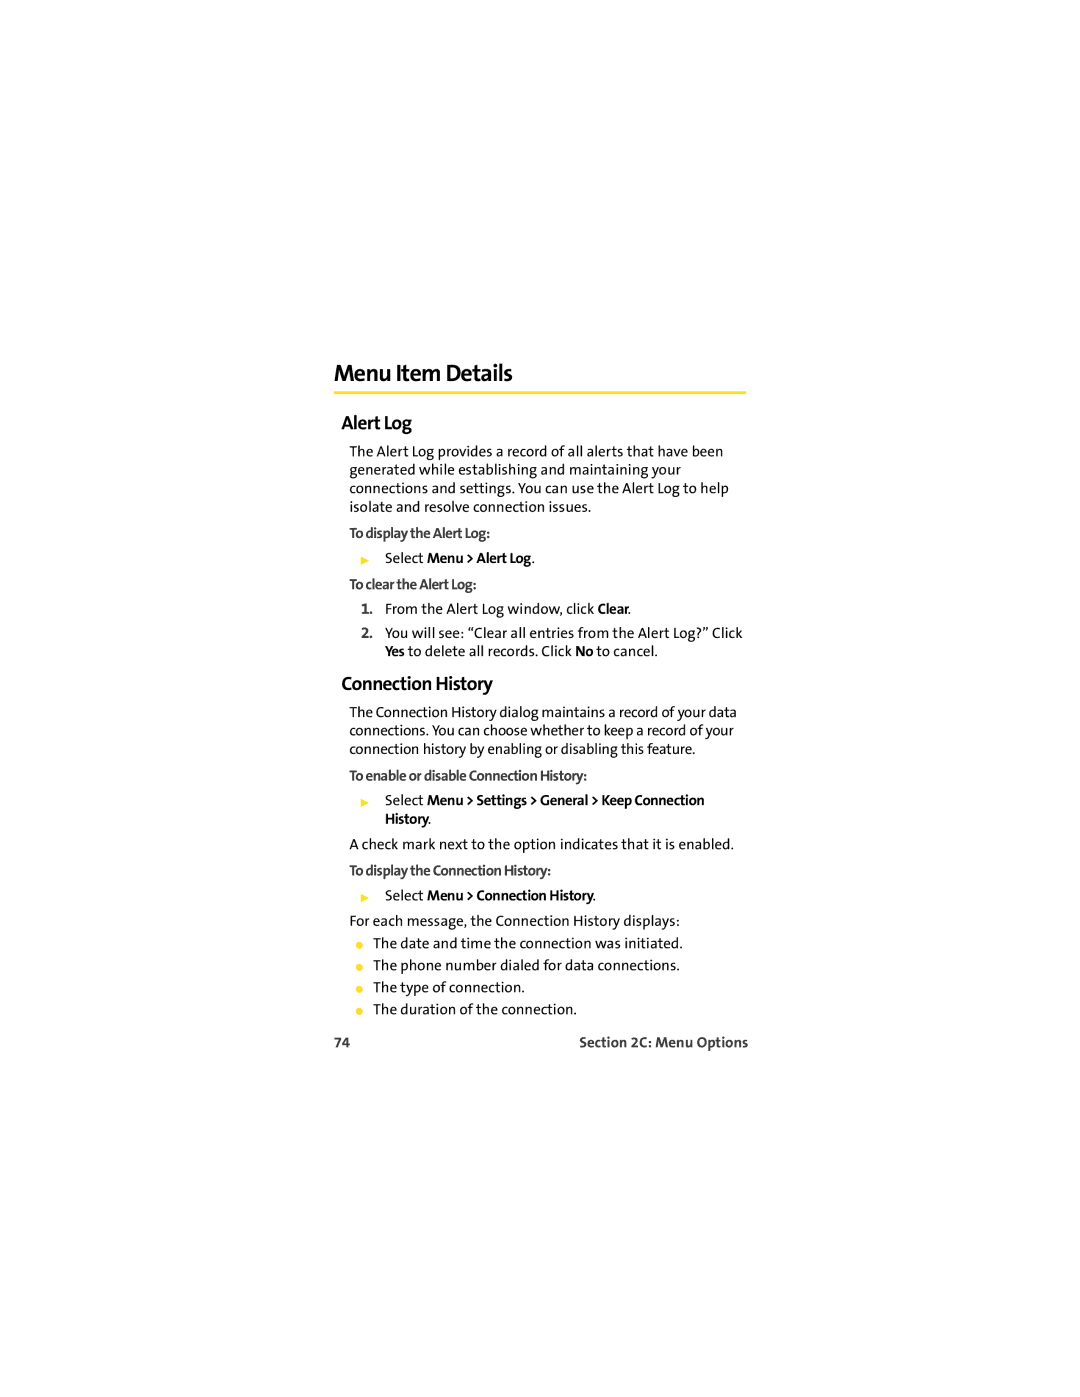 Sprint Nextel U727 manual Menu Item Details, Alert Log, Connection History 